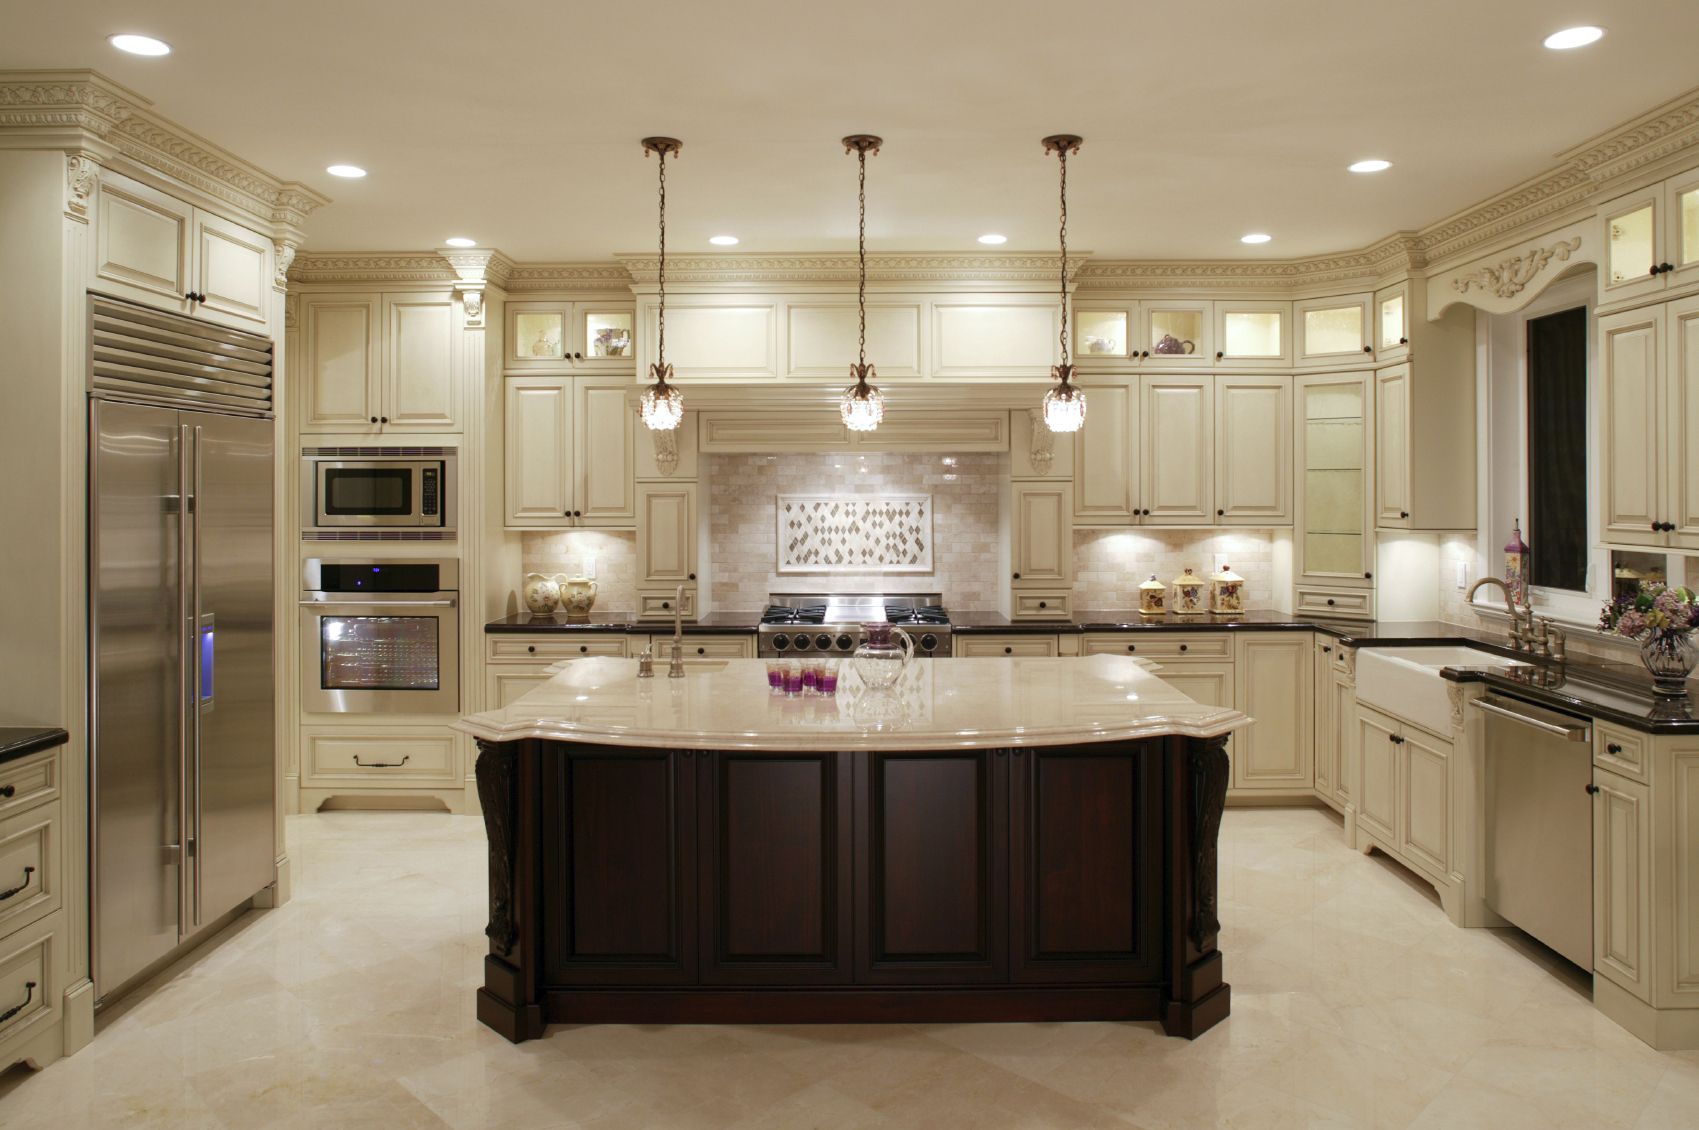 U-shaped luxurious large kitchen with pendant lights